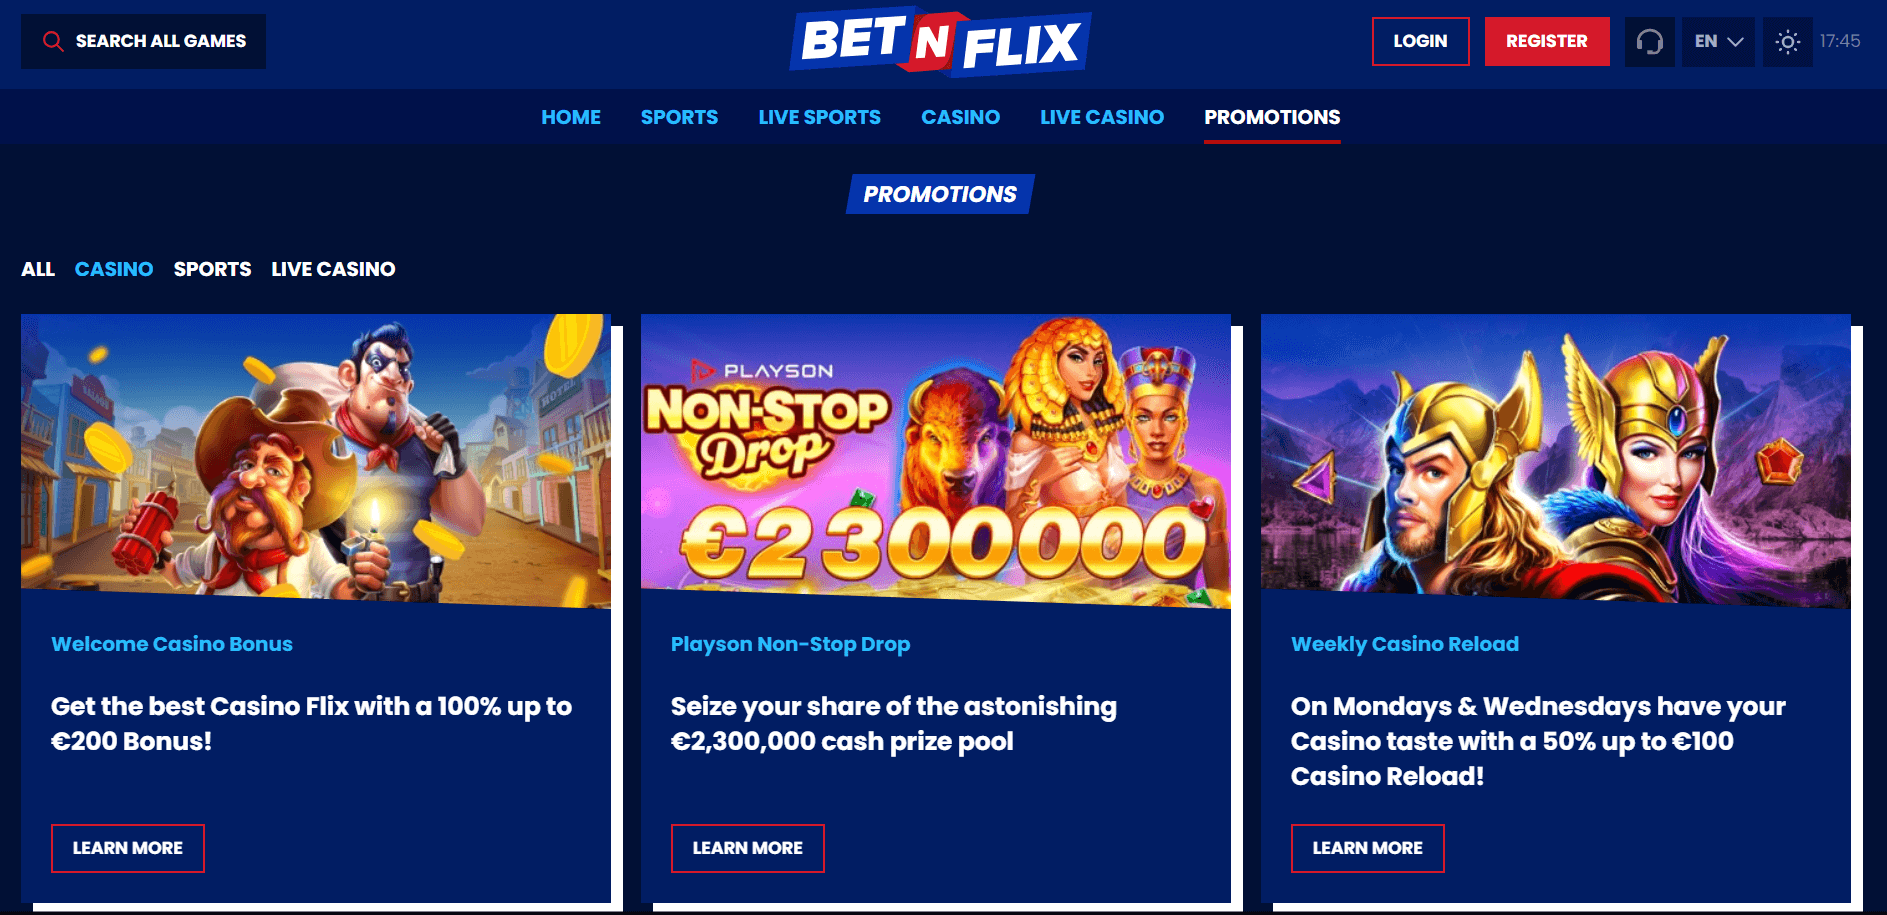 BetNFlix online casino promotions